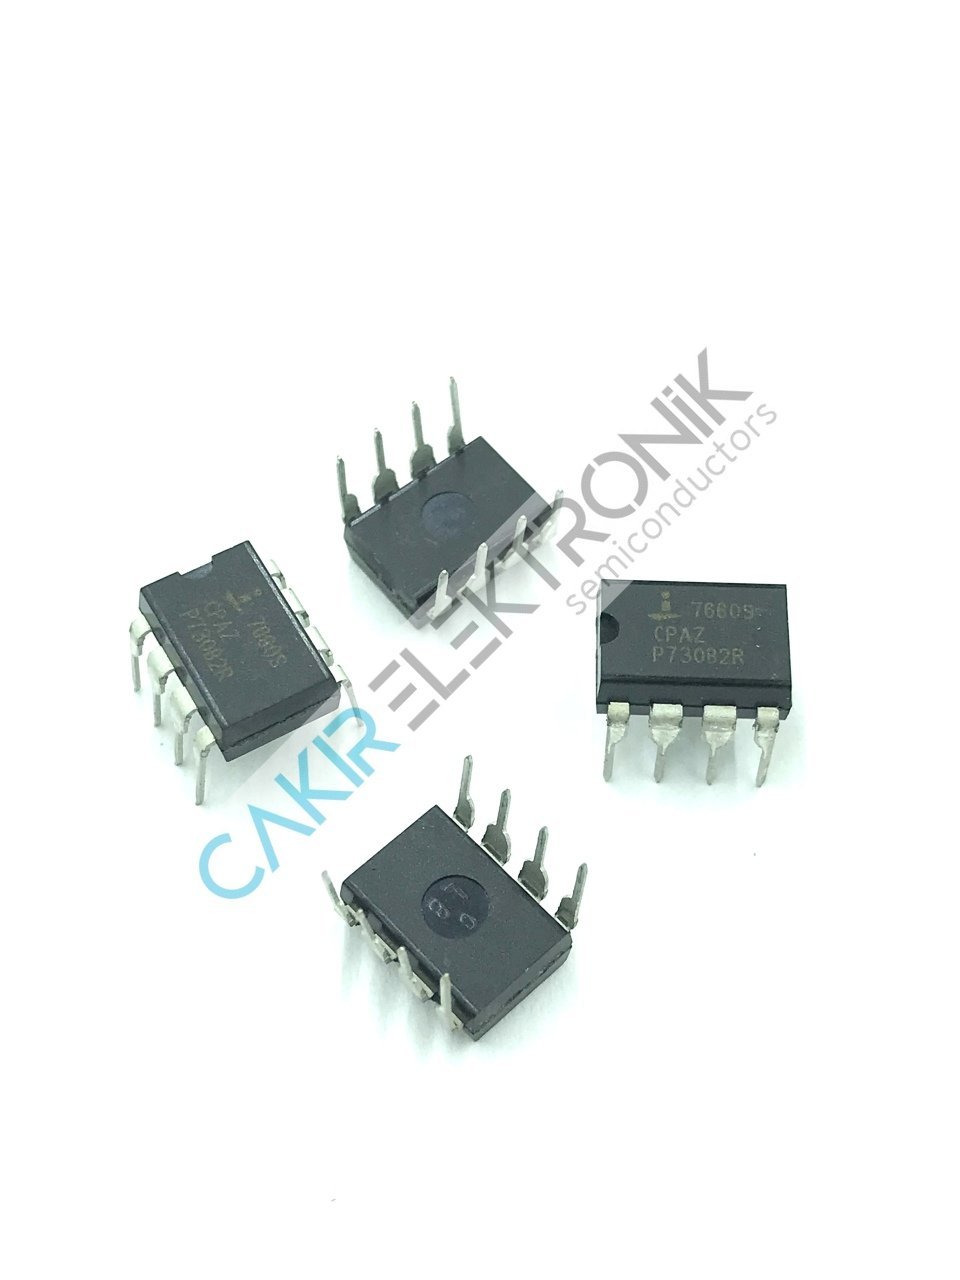 ICL7660CPAZ - 7660 - 7660CPAZ - CMOS Voltage Converters